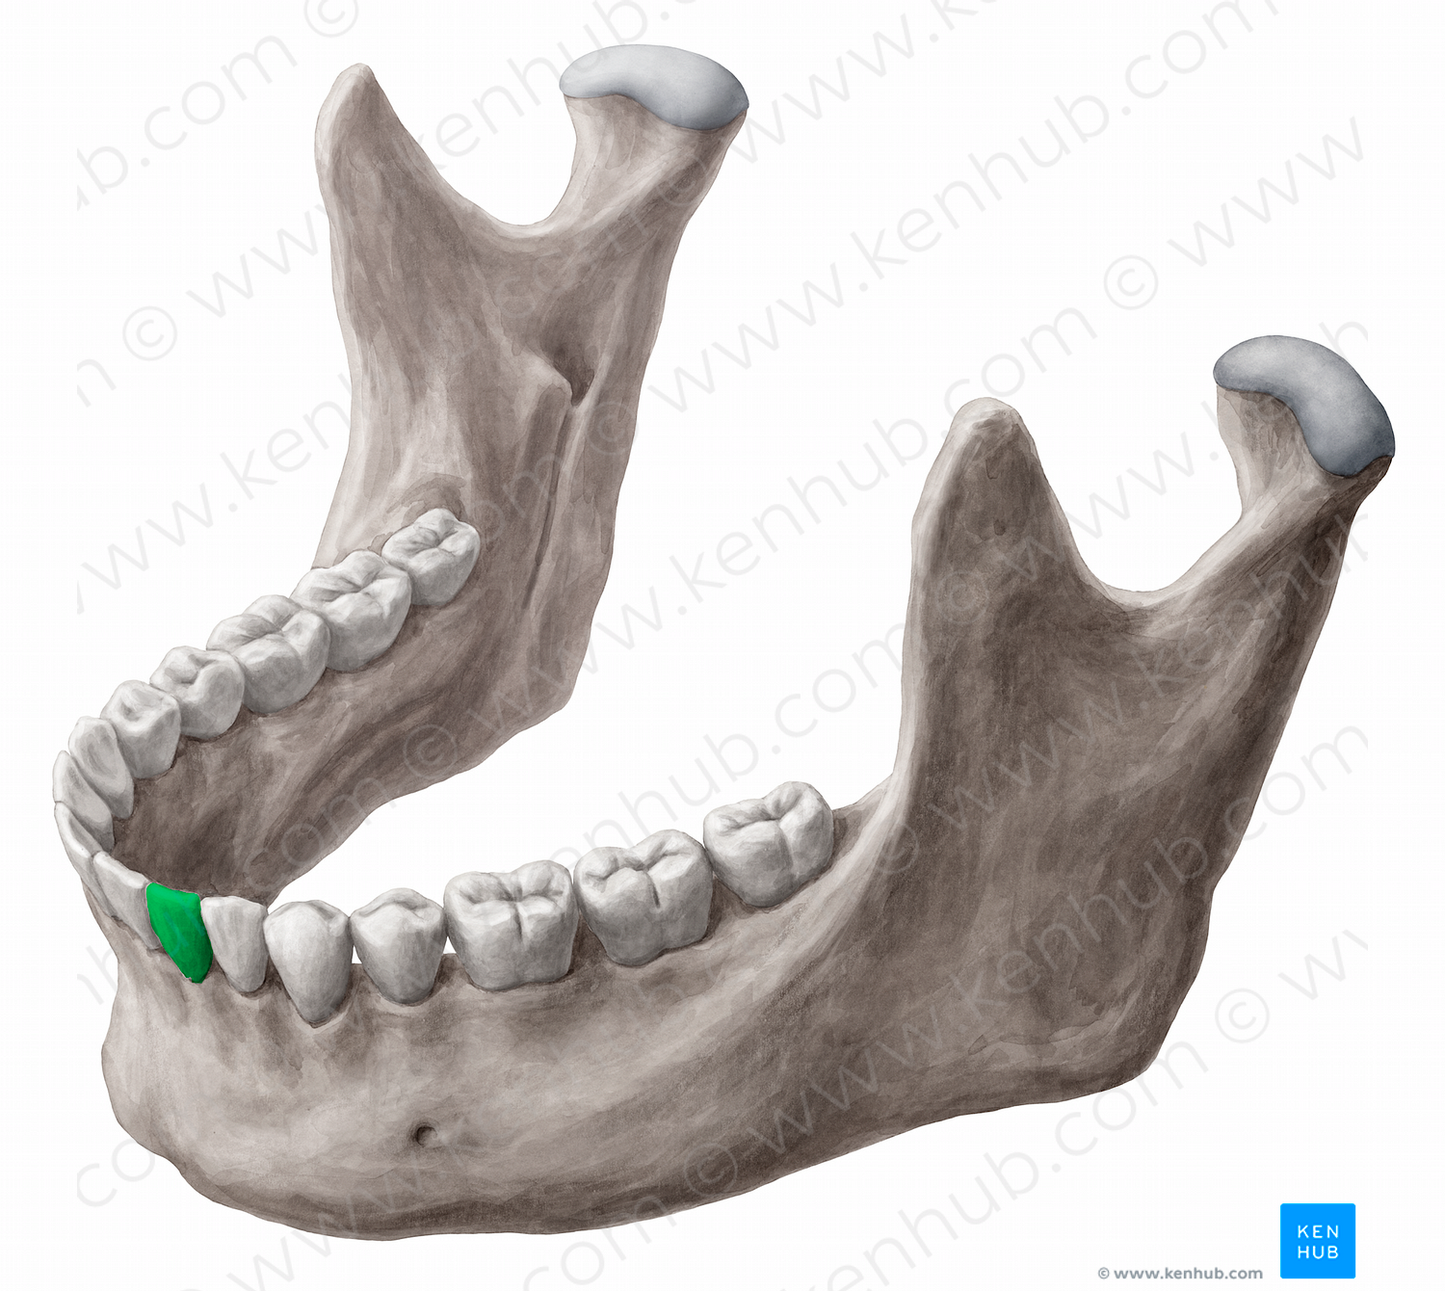 Mandibular left lateral incisor tooth (#12848)